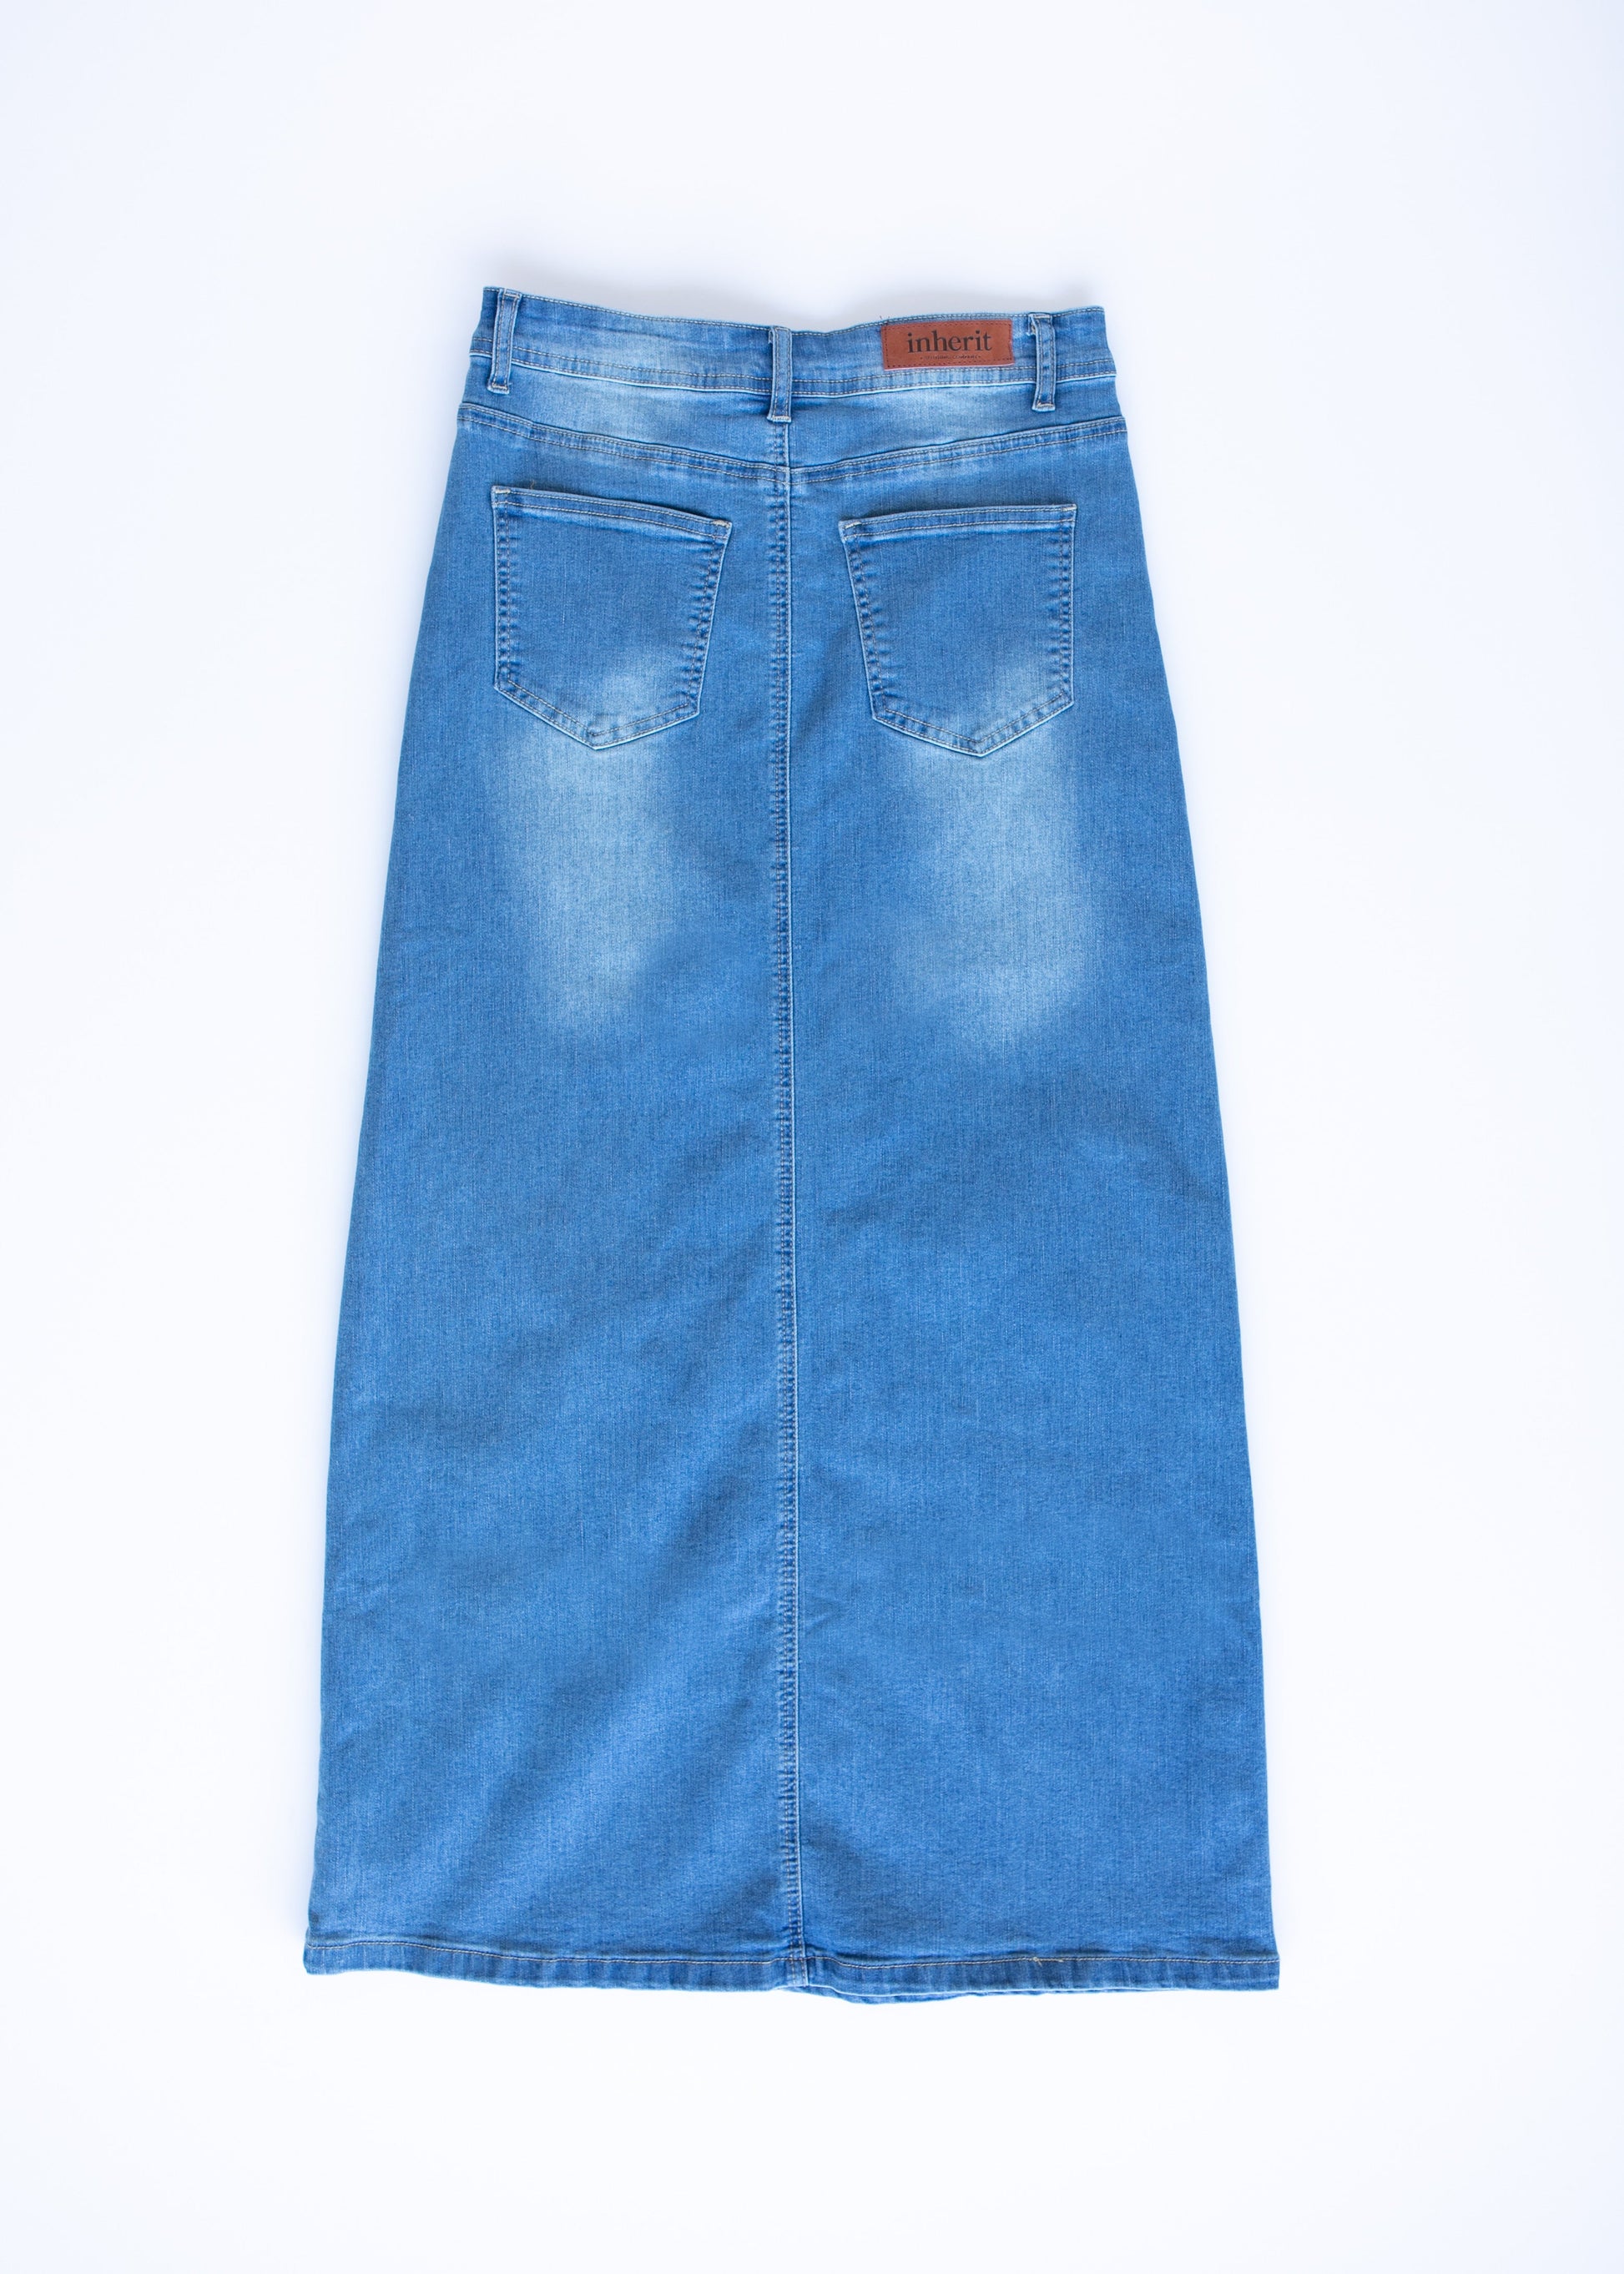 Jessa Vintage Wash Button Front Long Denim Skirt - FINAL SALE IC Skirts